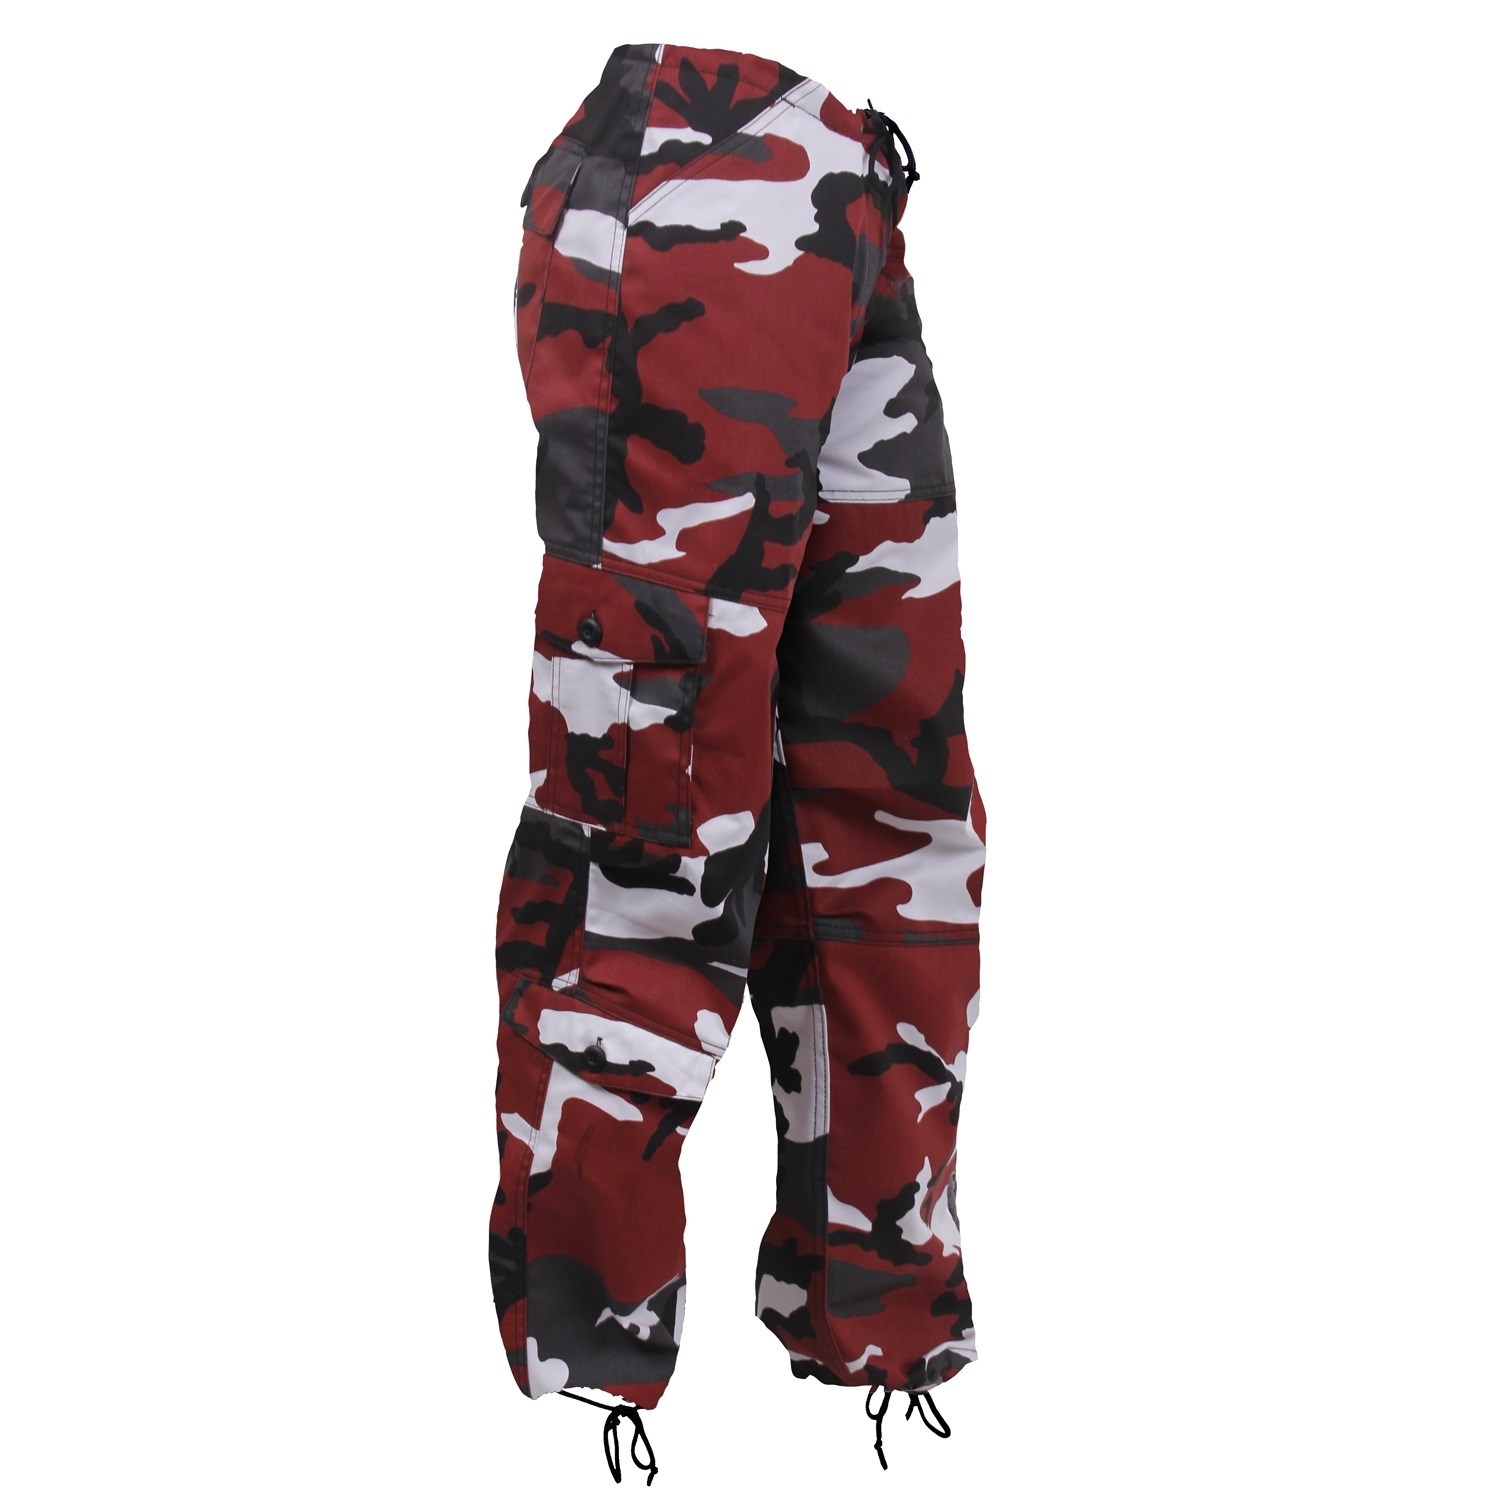 Shop Womens Purple Camo Fatigue Pants - Fatigues Army Navy Gear